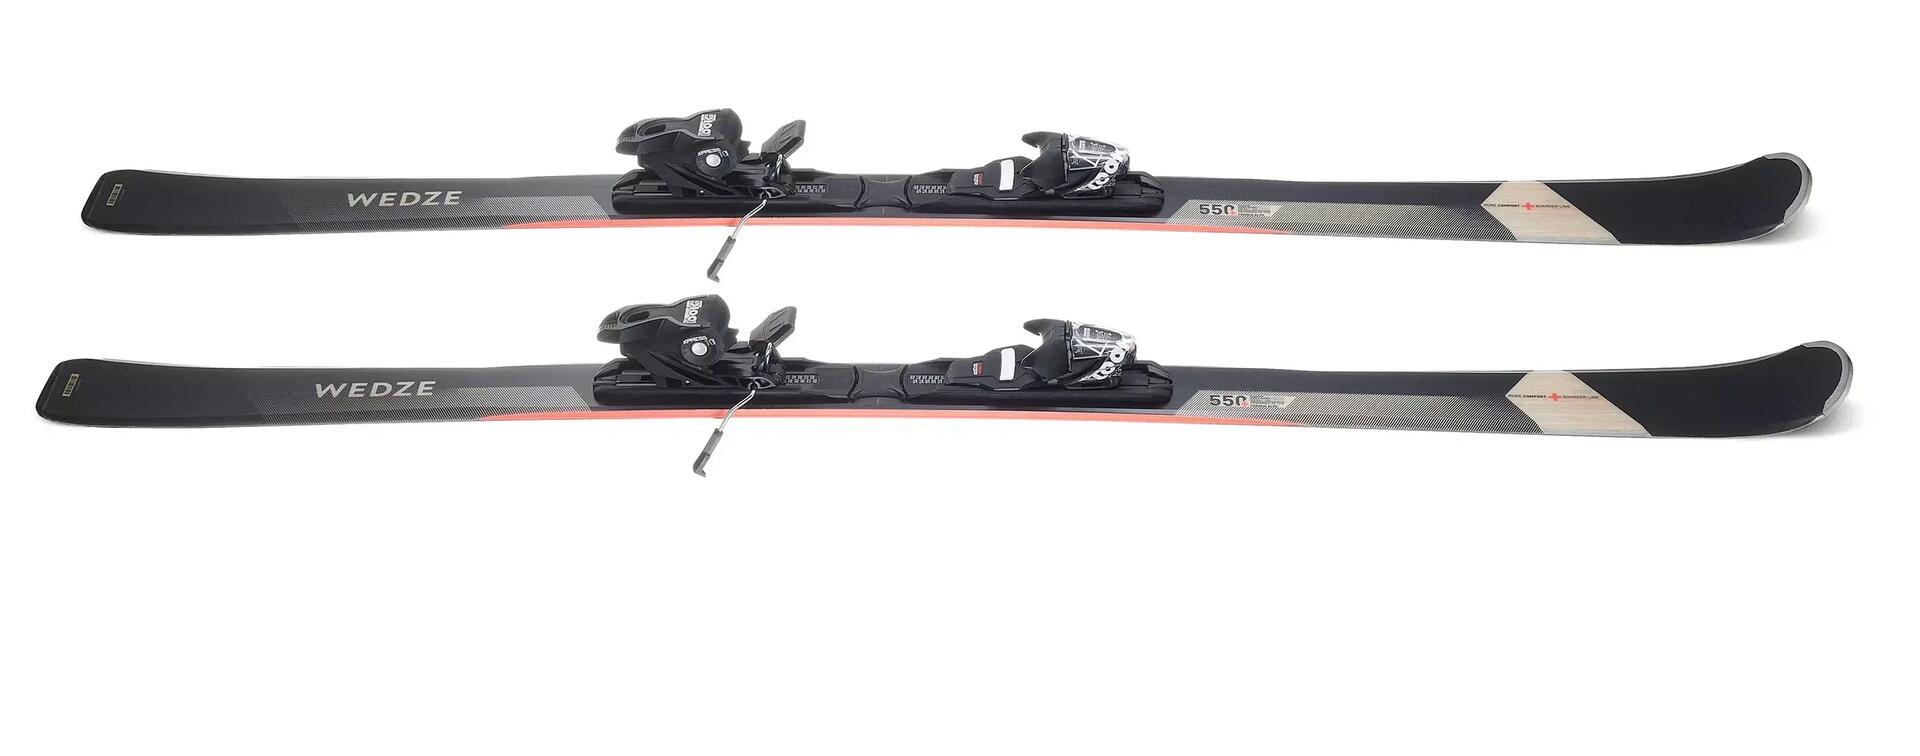 ski's cross 550+ wedze